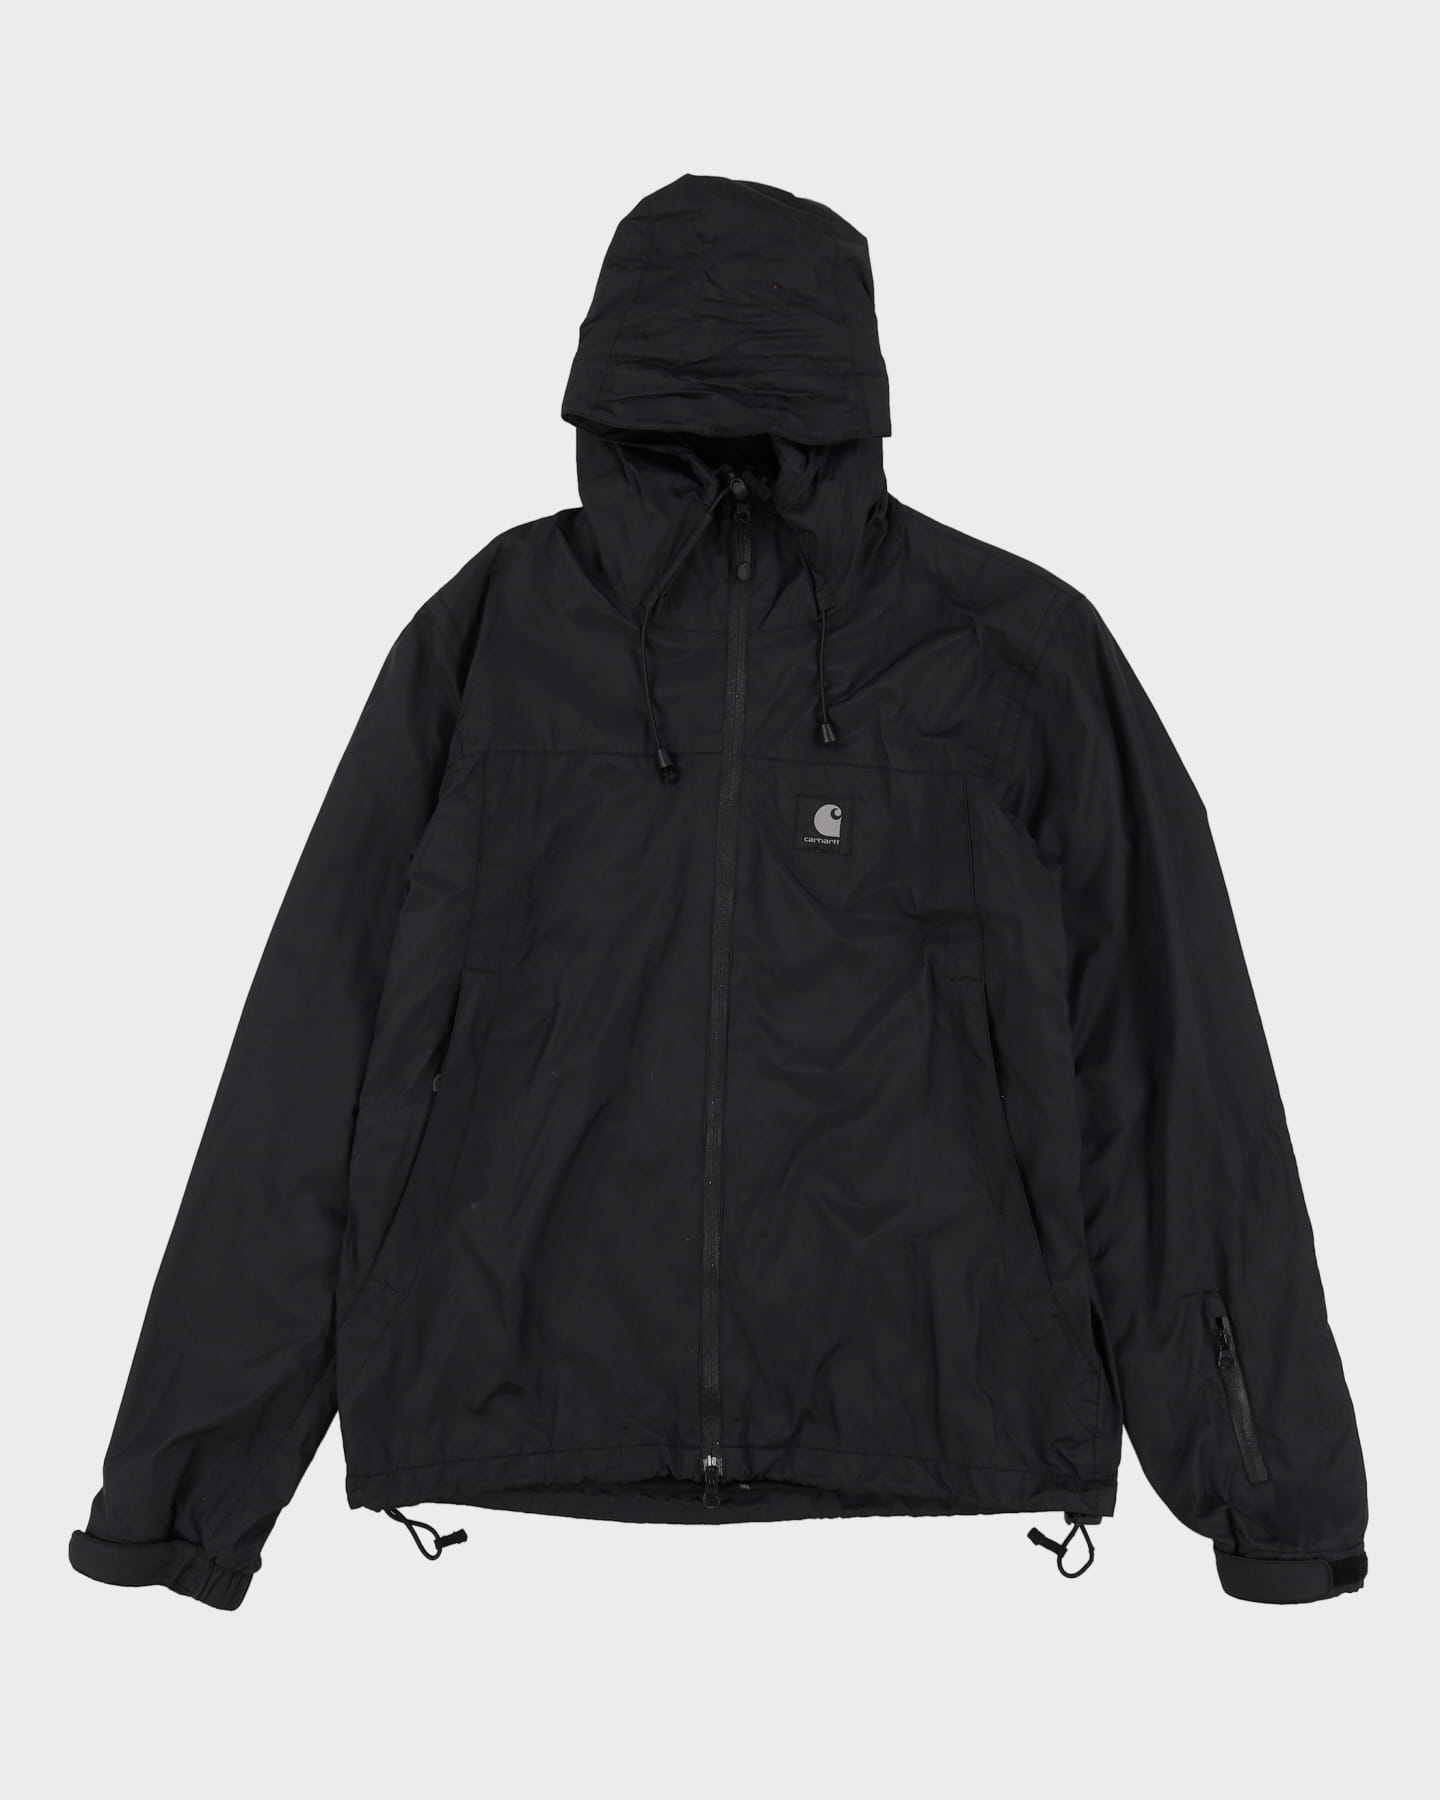 Carhartt Black Hooded Anorak Jacket - S